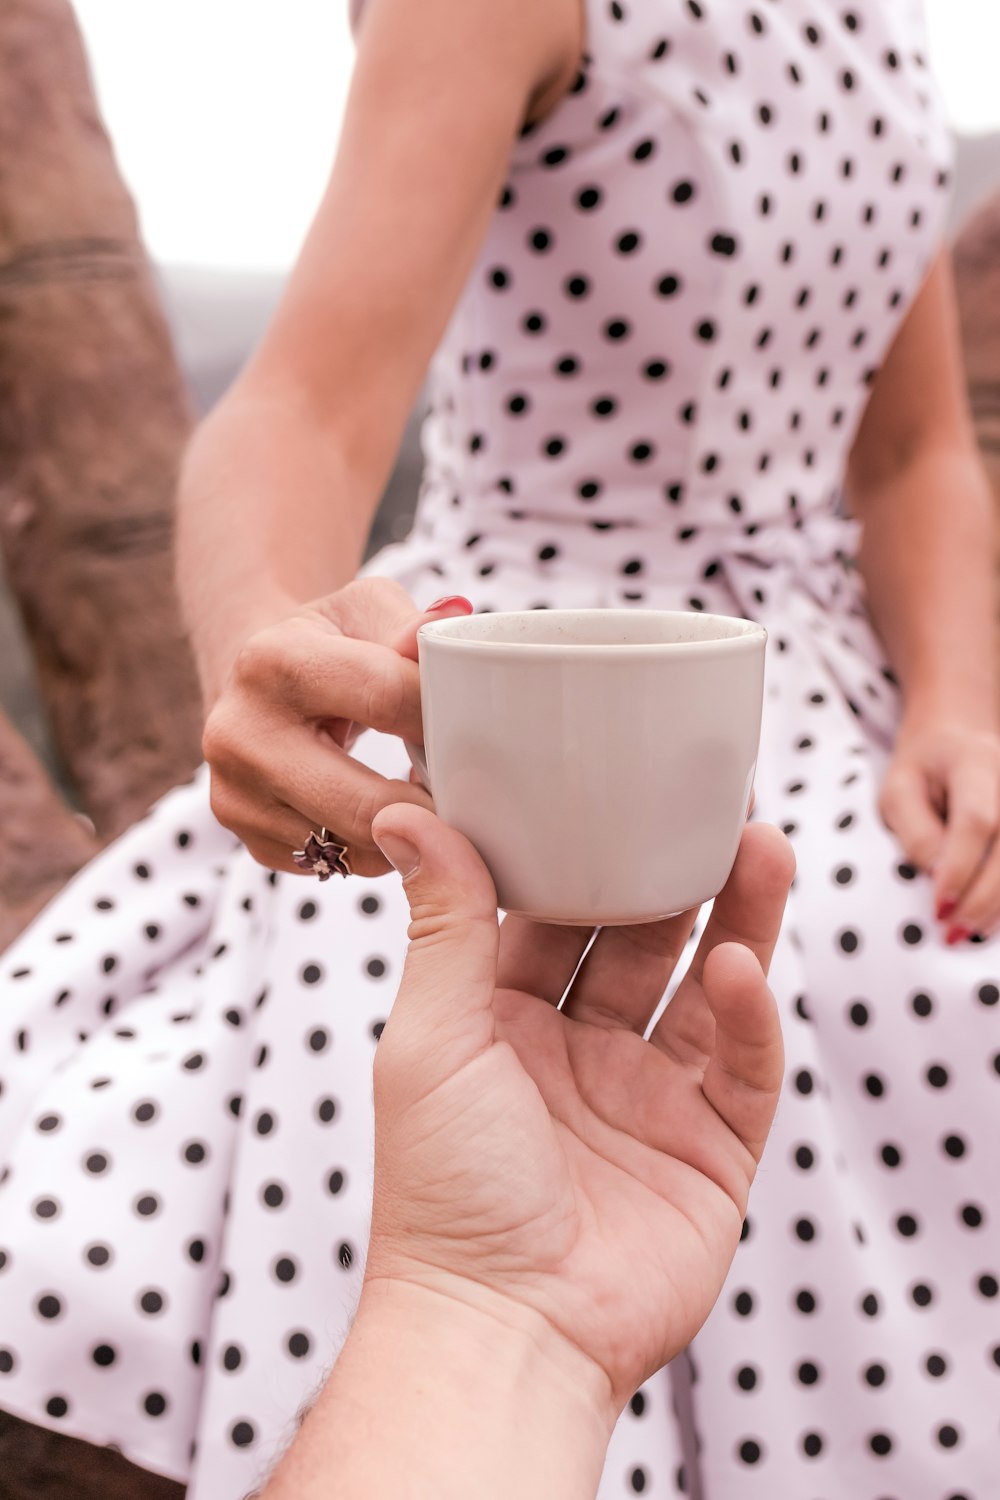 women;s white polka dot dress close-up photography